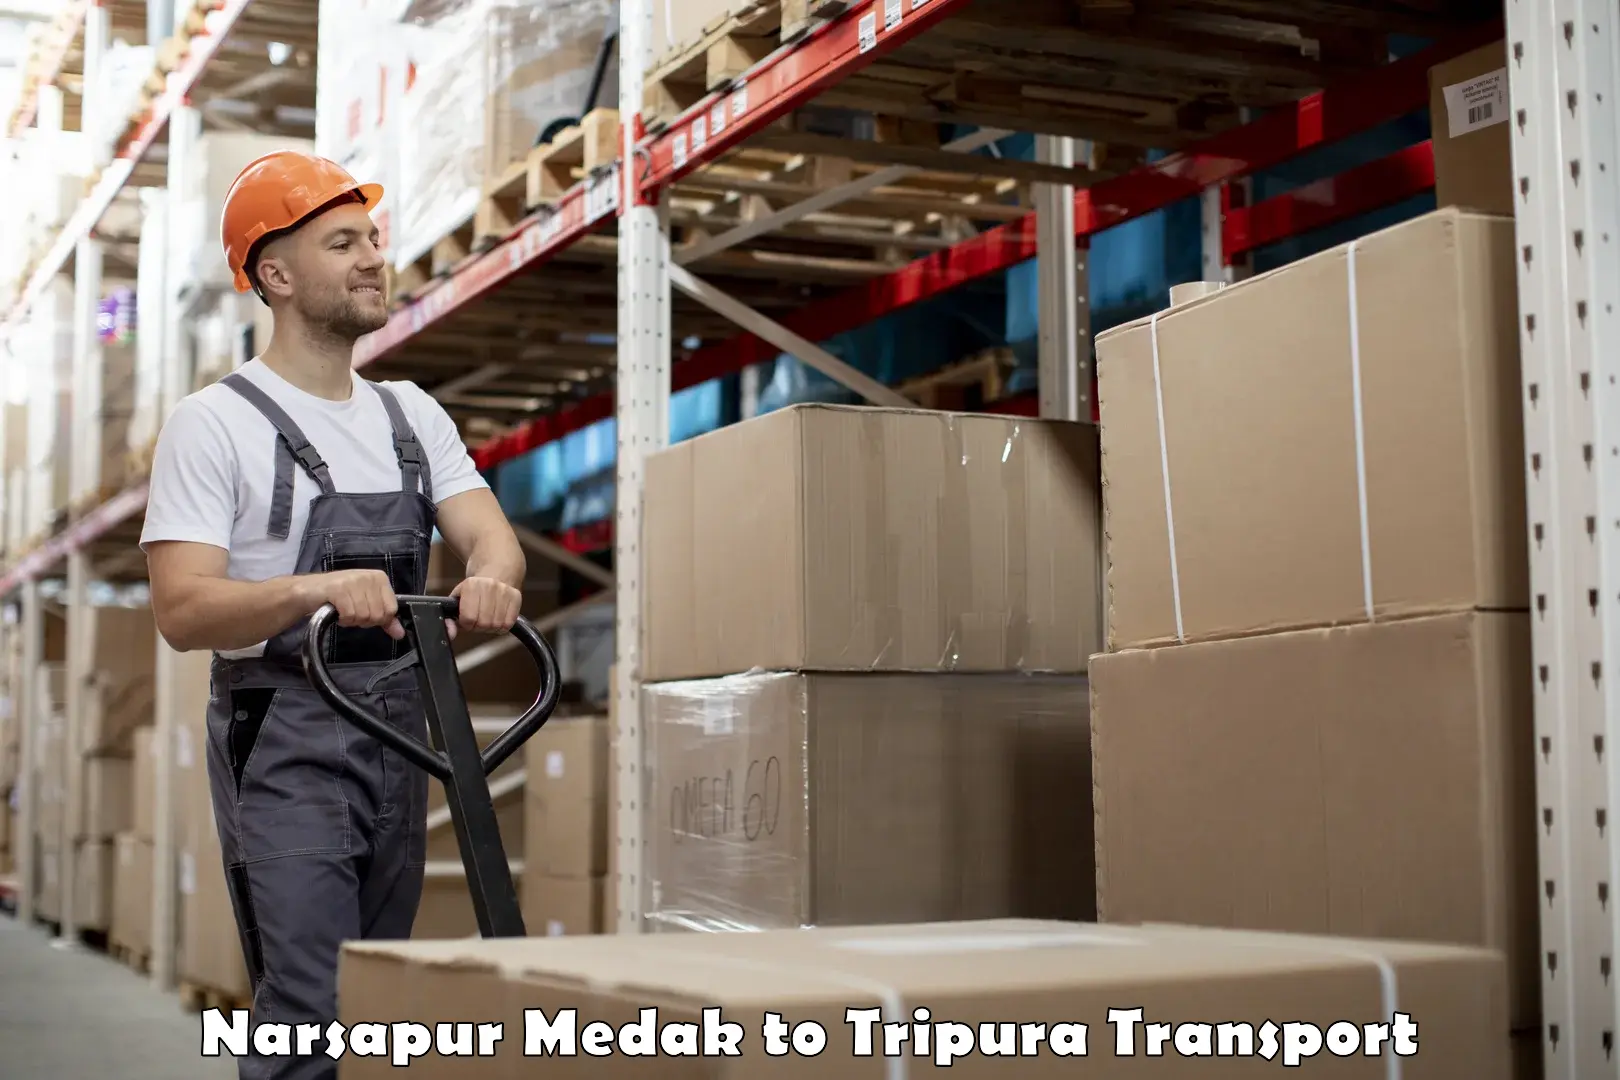 Furniture transport service Narsapur Medak to North Tripura